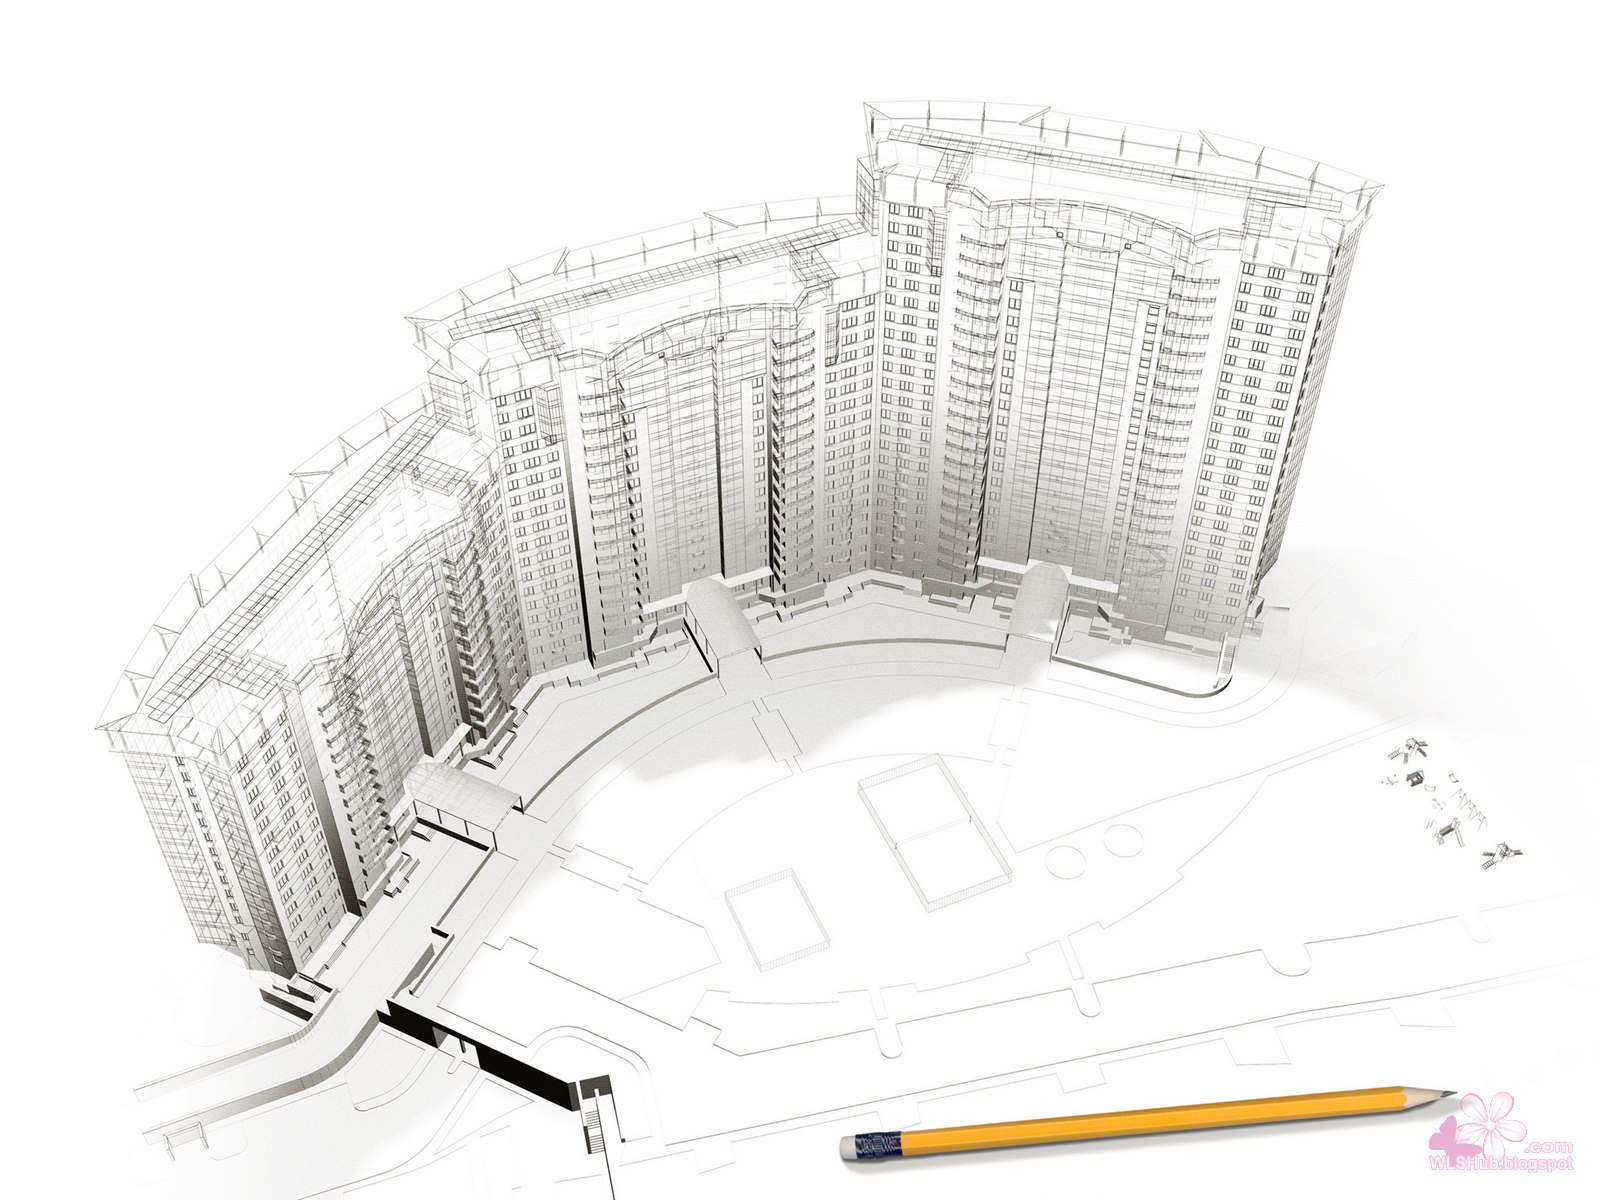 prepare building design ii to convey design ideas and technical